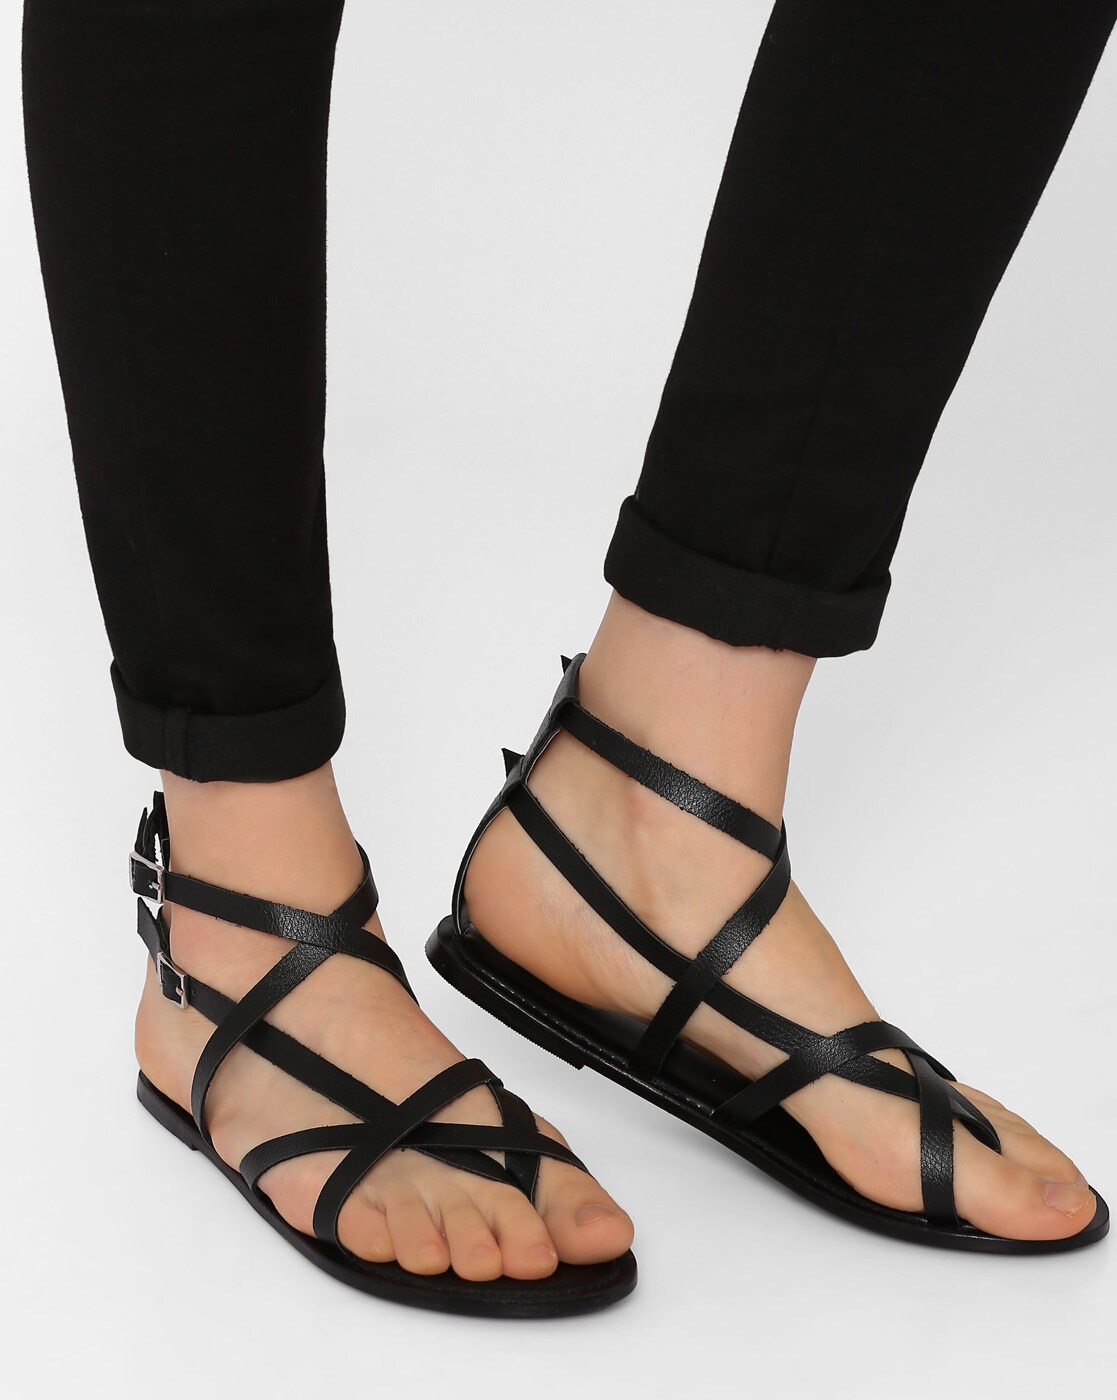 Buy Women Black Party Sandals Online | SKU: 40-94-11-36-Metro Shoes